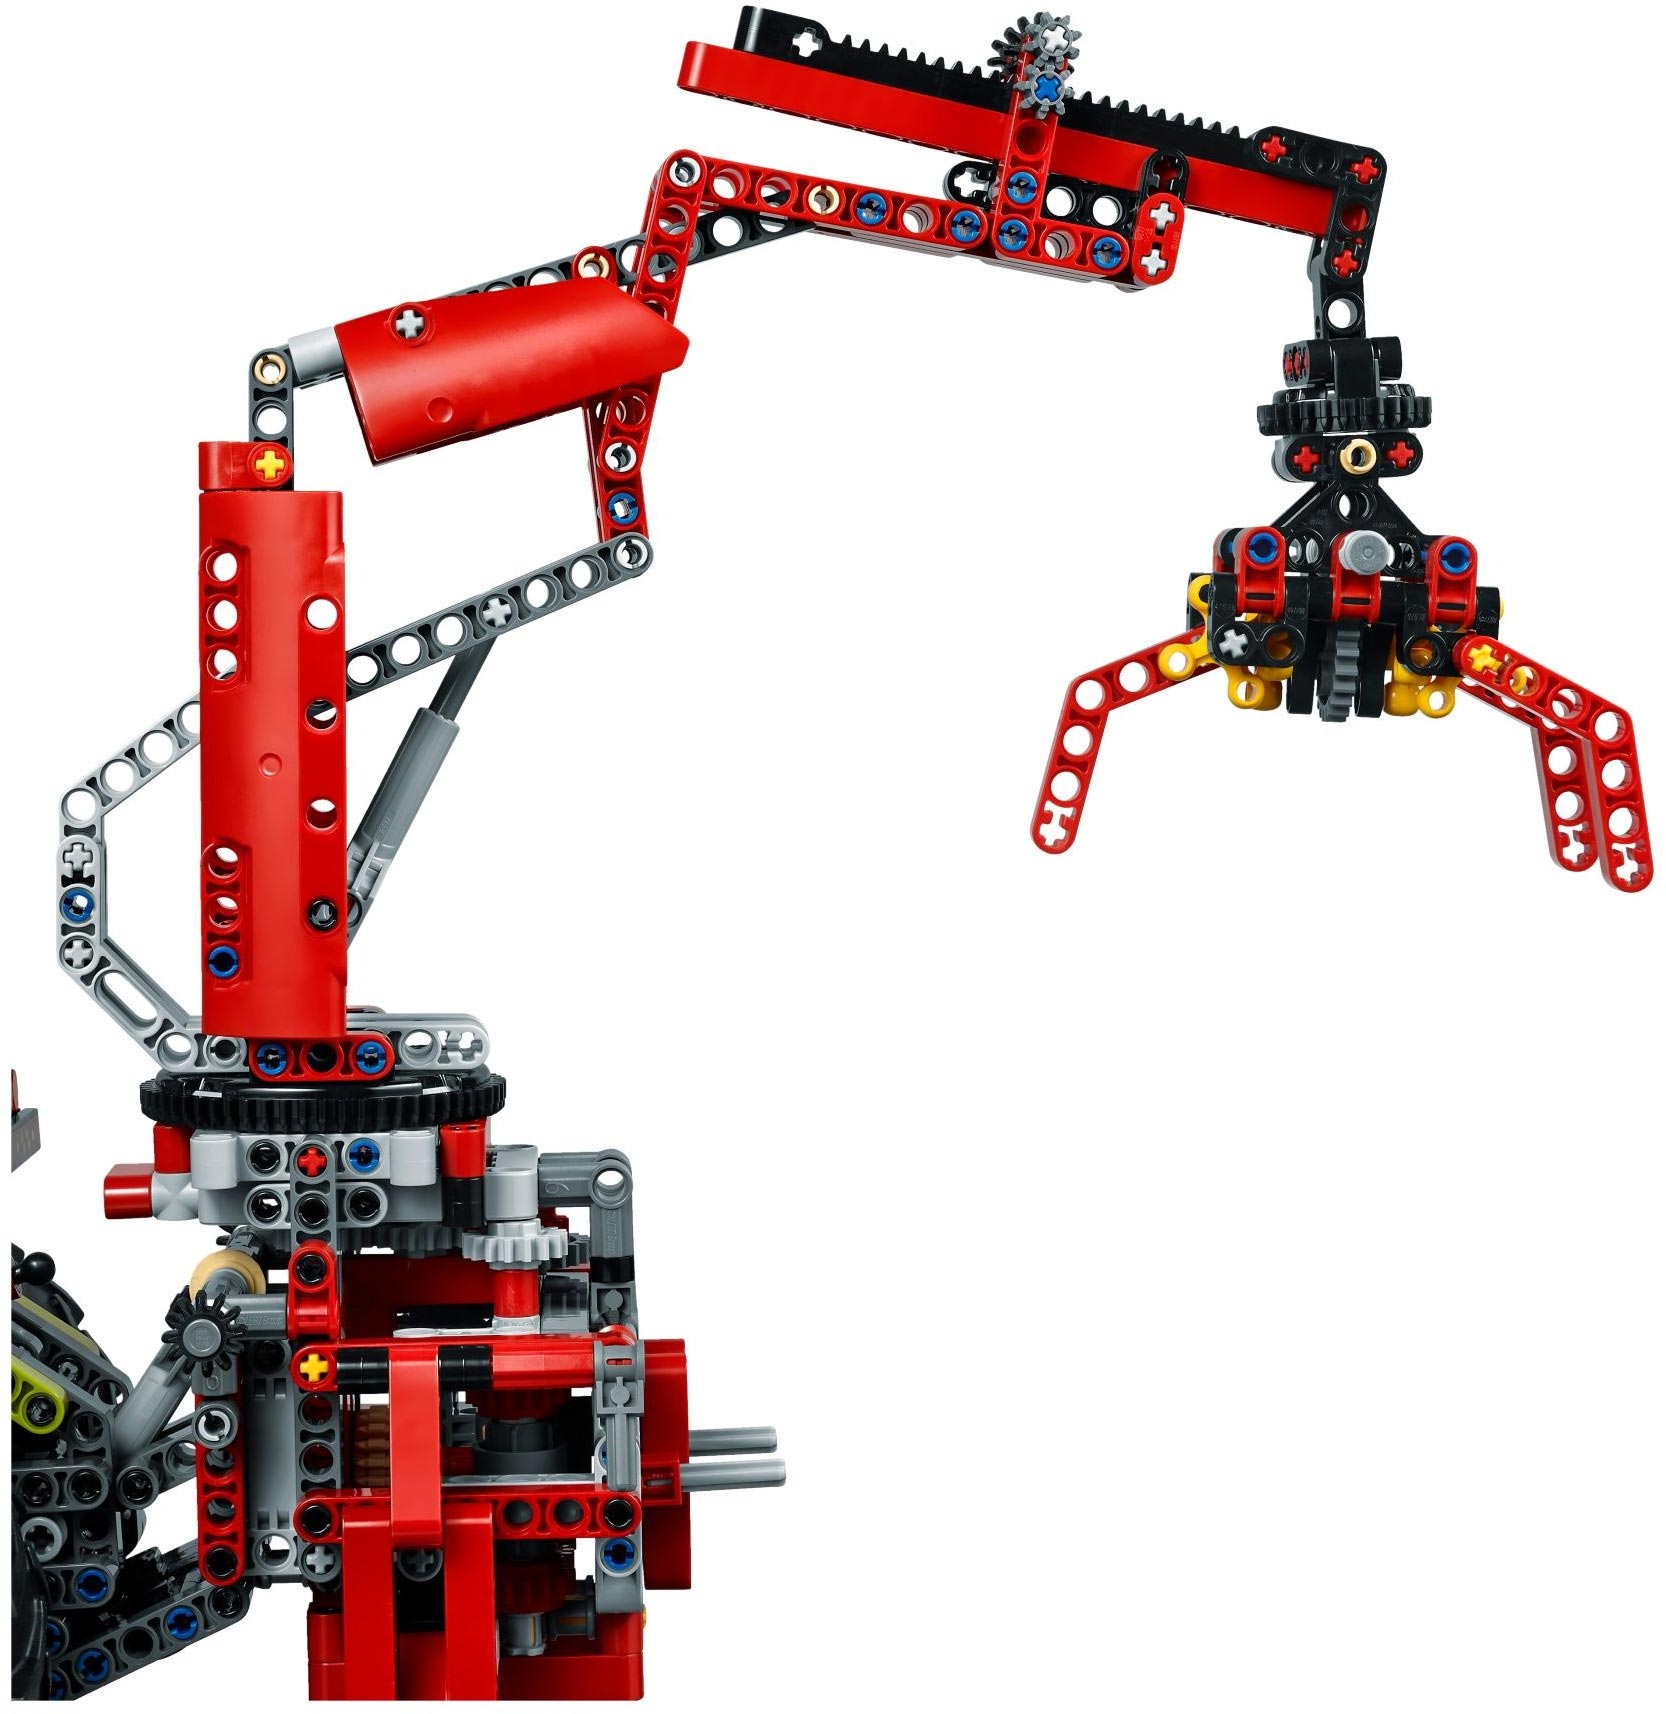 Lego Technic. Лего Техник. Claas Xerion 5000 Trac Vc™  